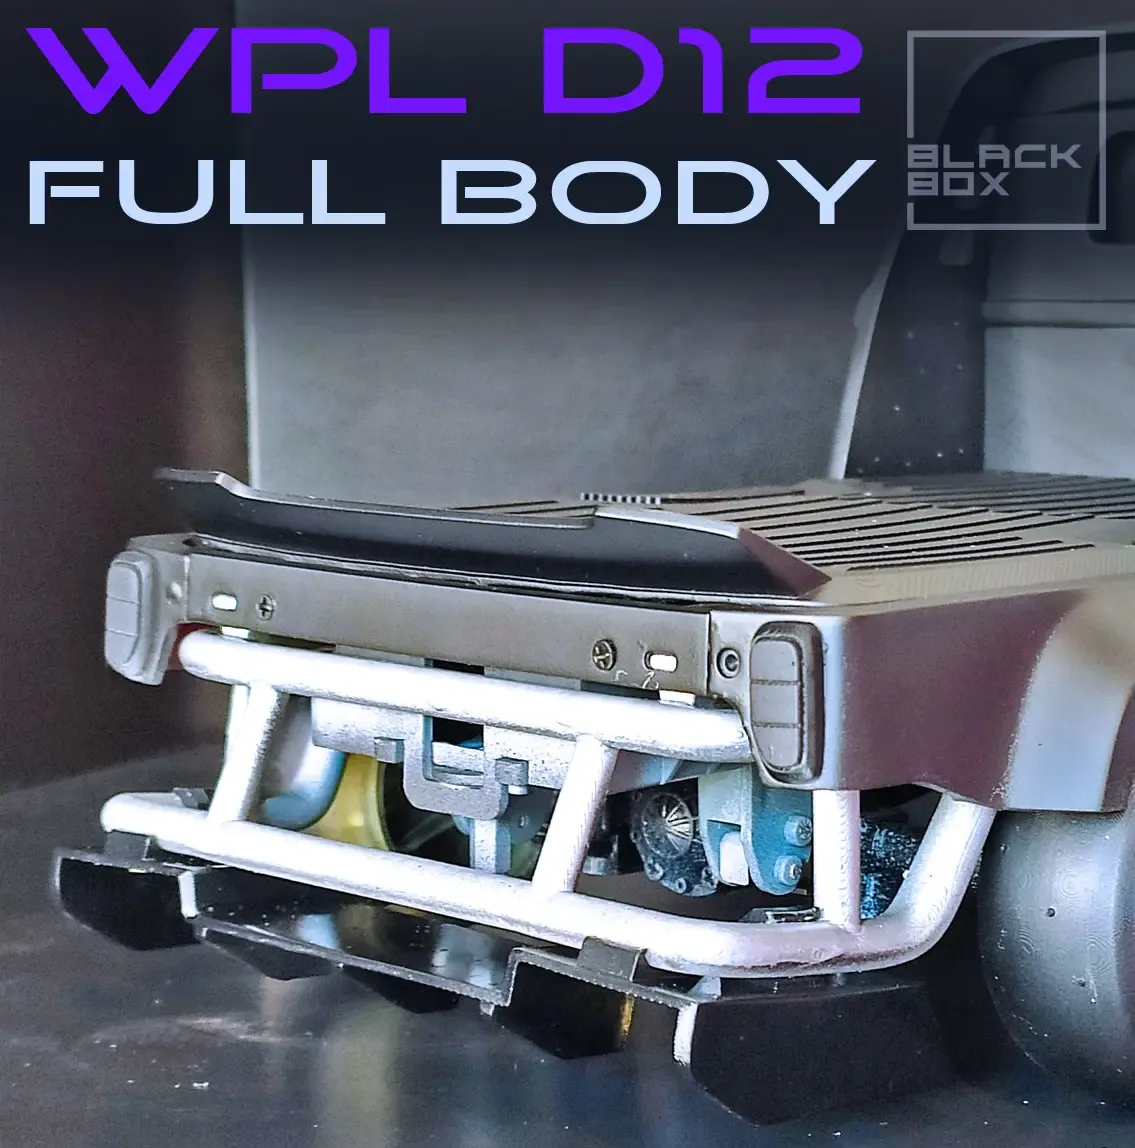 WPL D12 RC FULLBODY BY BLACKBOX